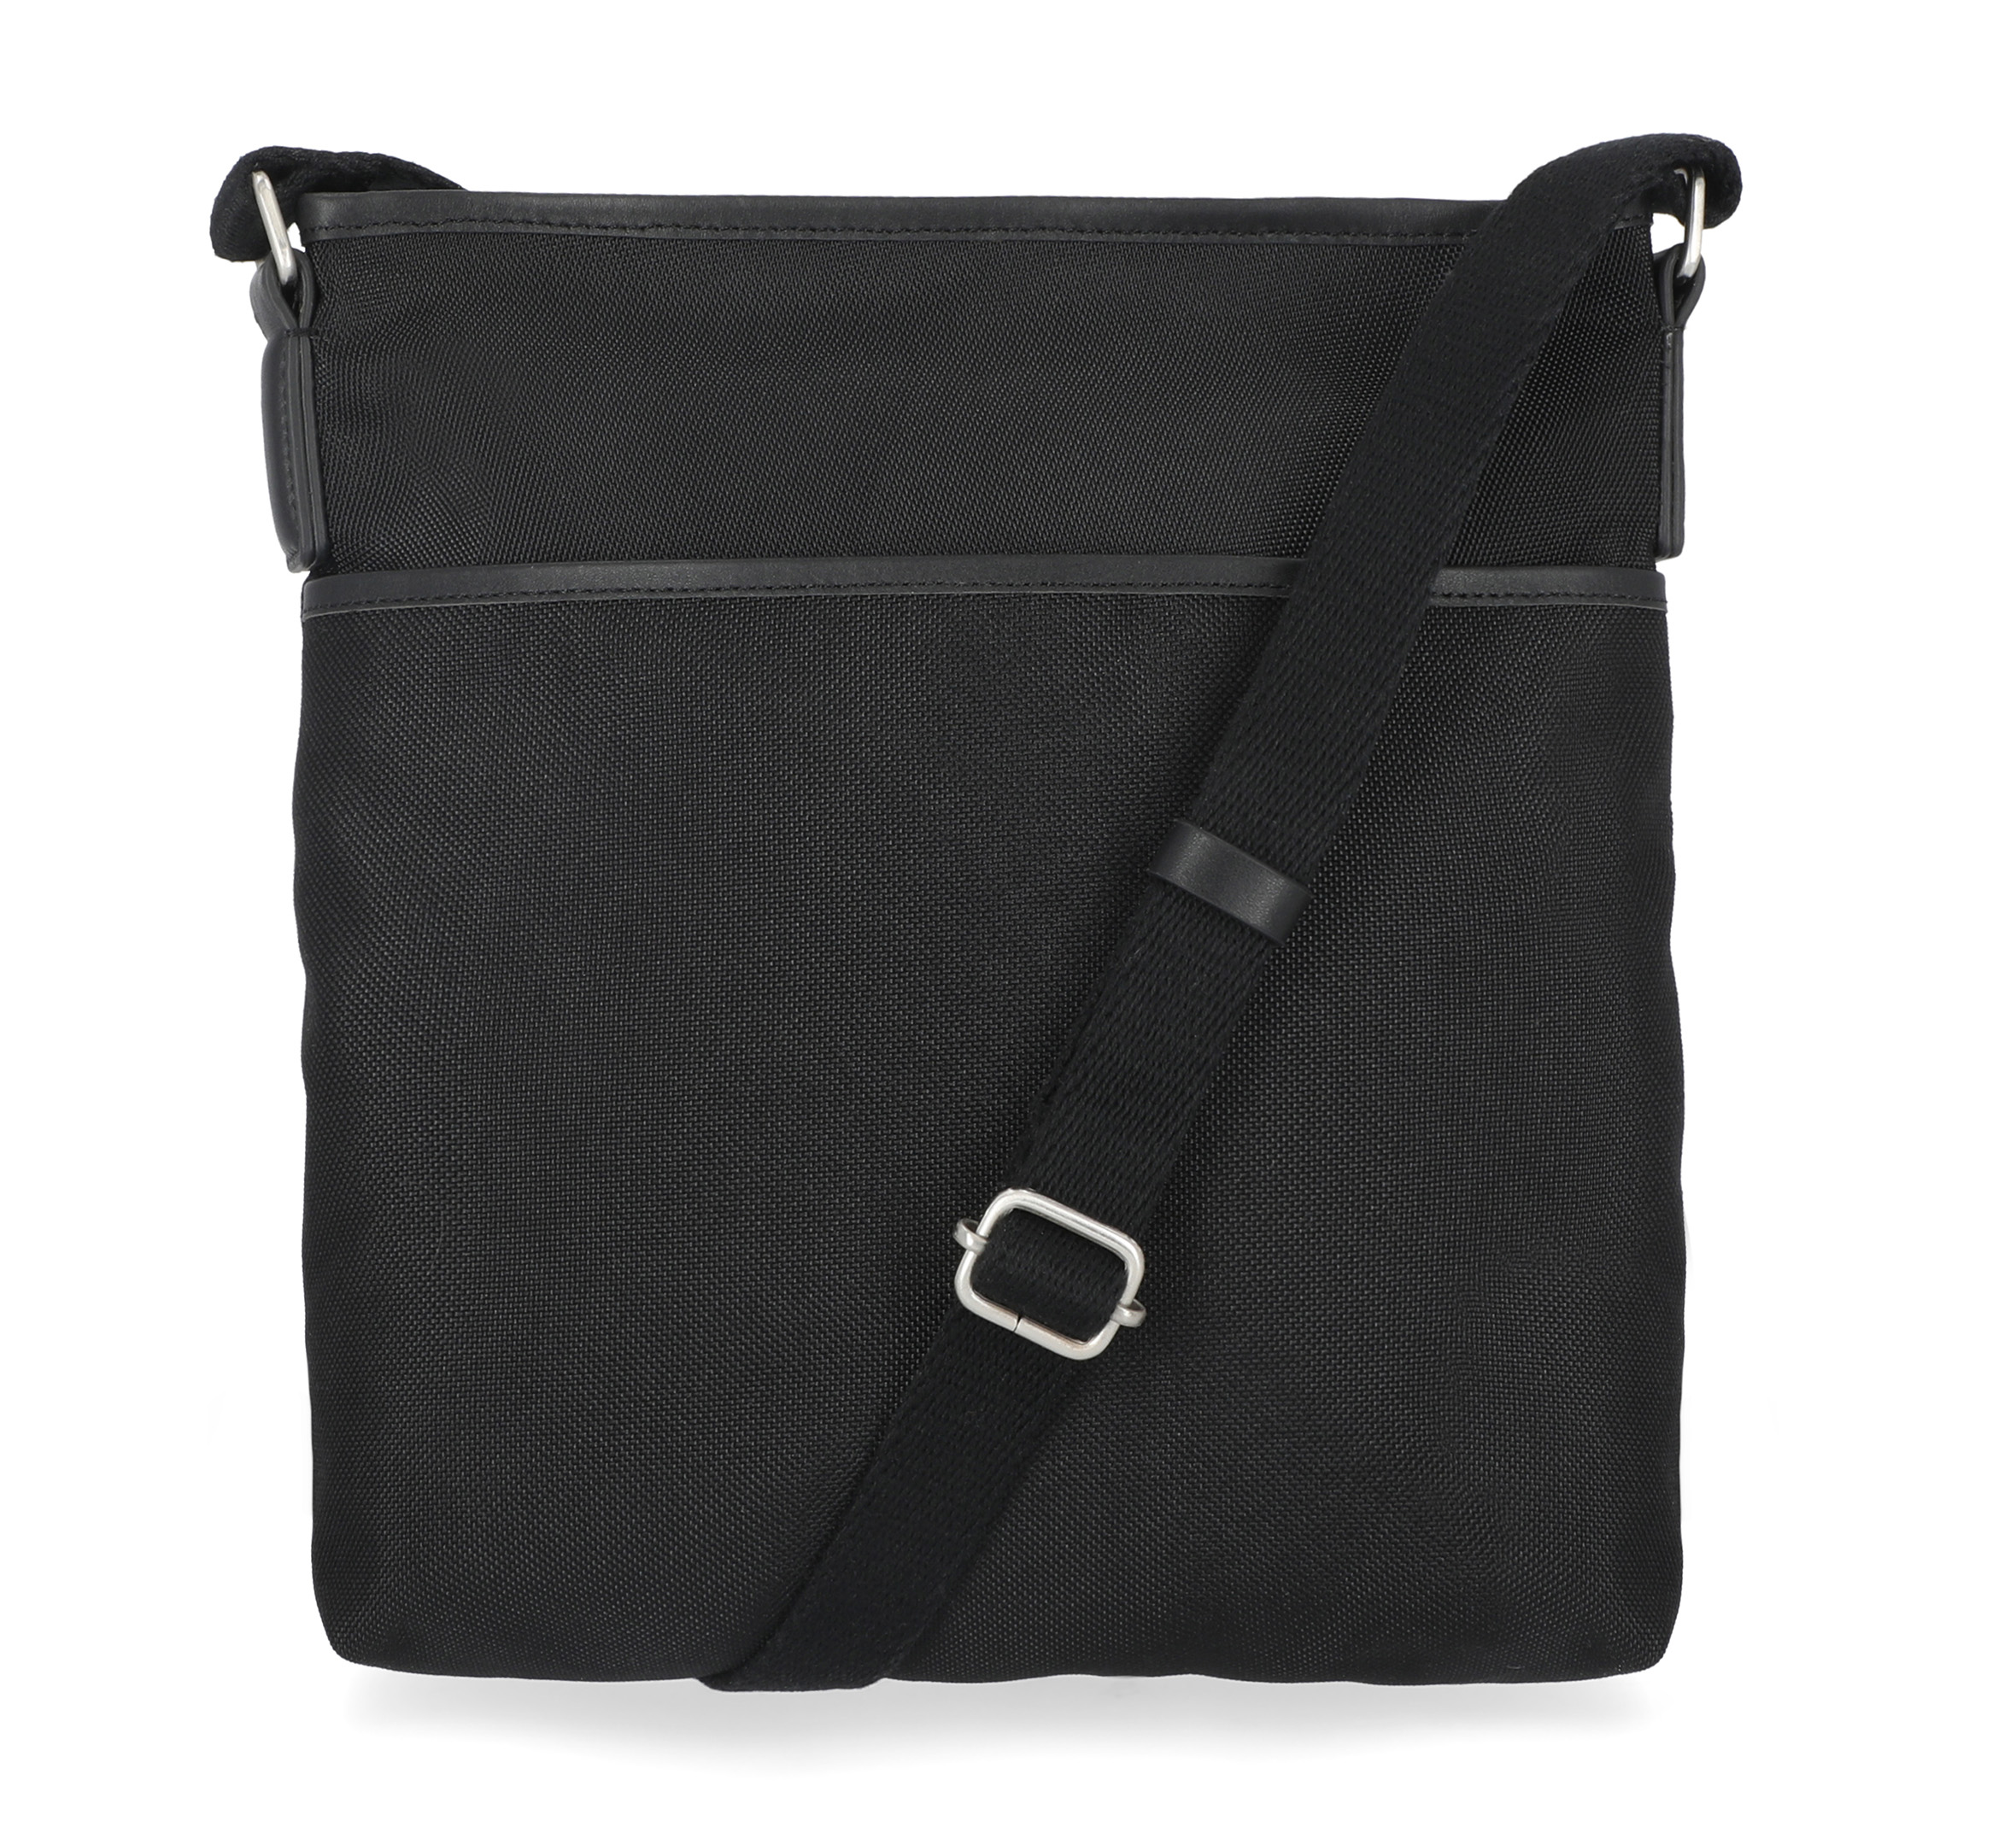 Campomaggi Enea Leather and Canvas Crossbody Bag — Fendrihan Canada